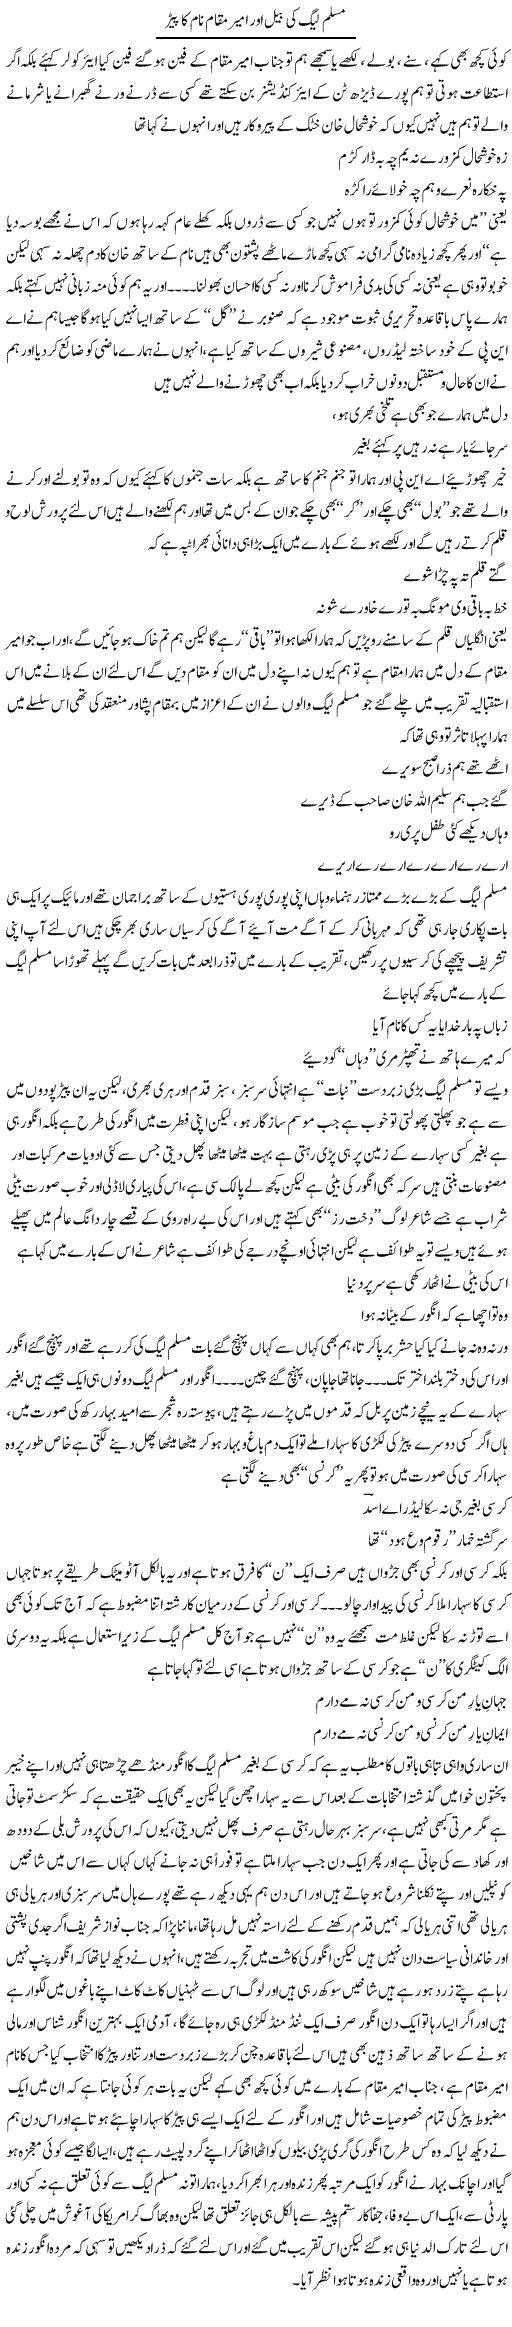 Muslim League Ki Bail Out Ameer Muqam Nam Ka Pair | Saad Ullah Jan Barq | Daily Urdu Columns